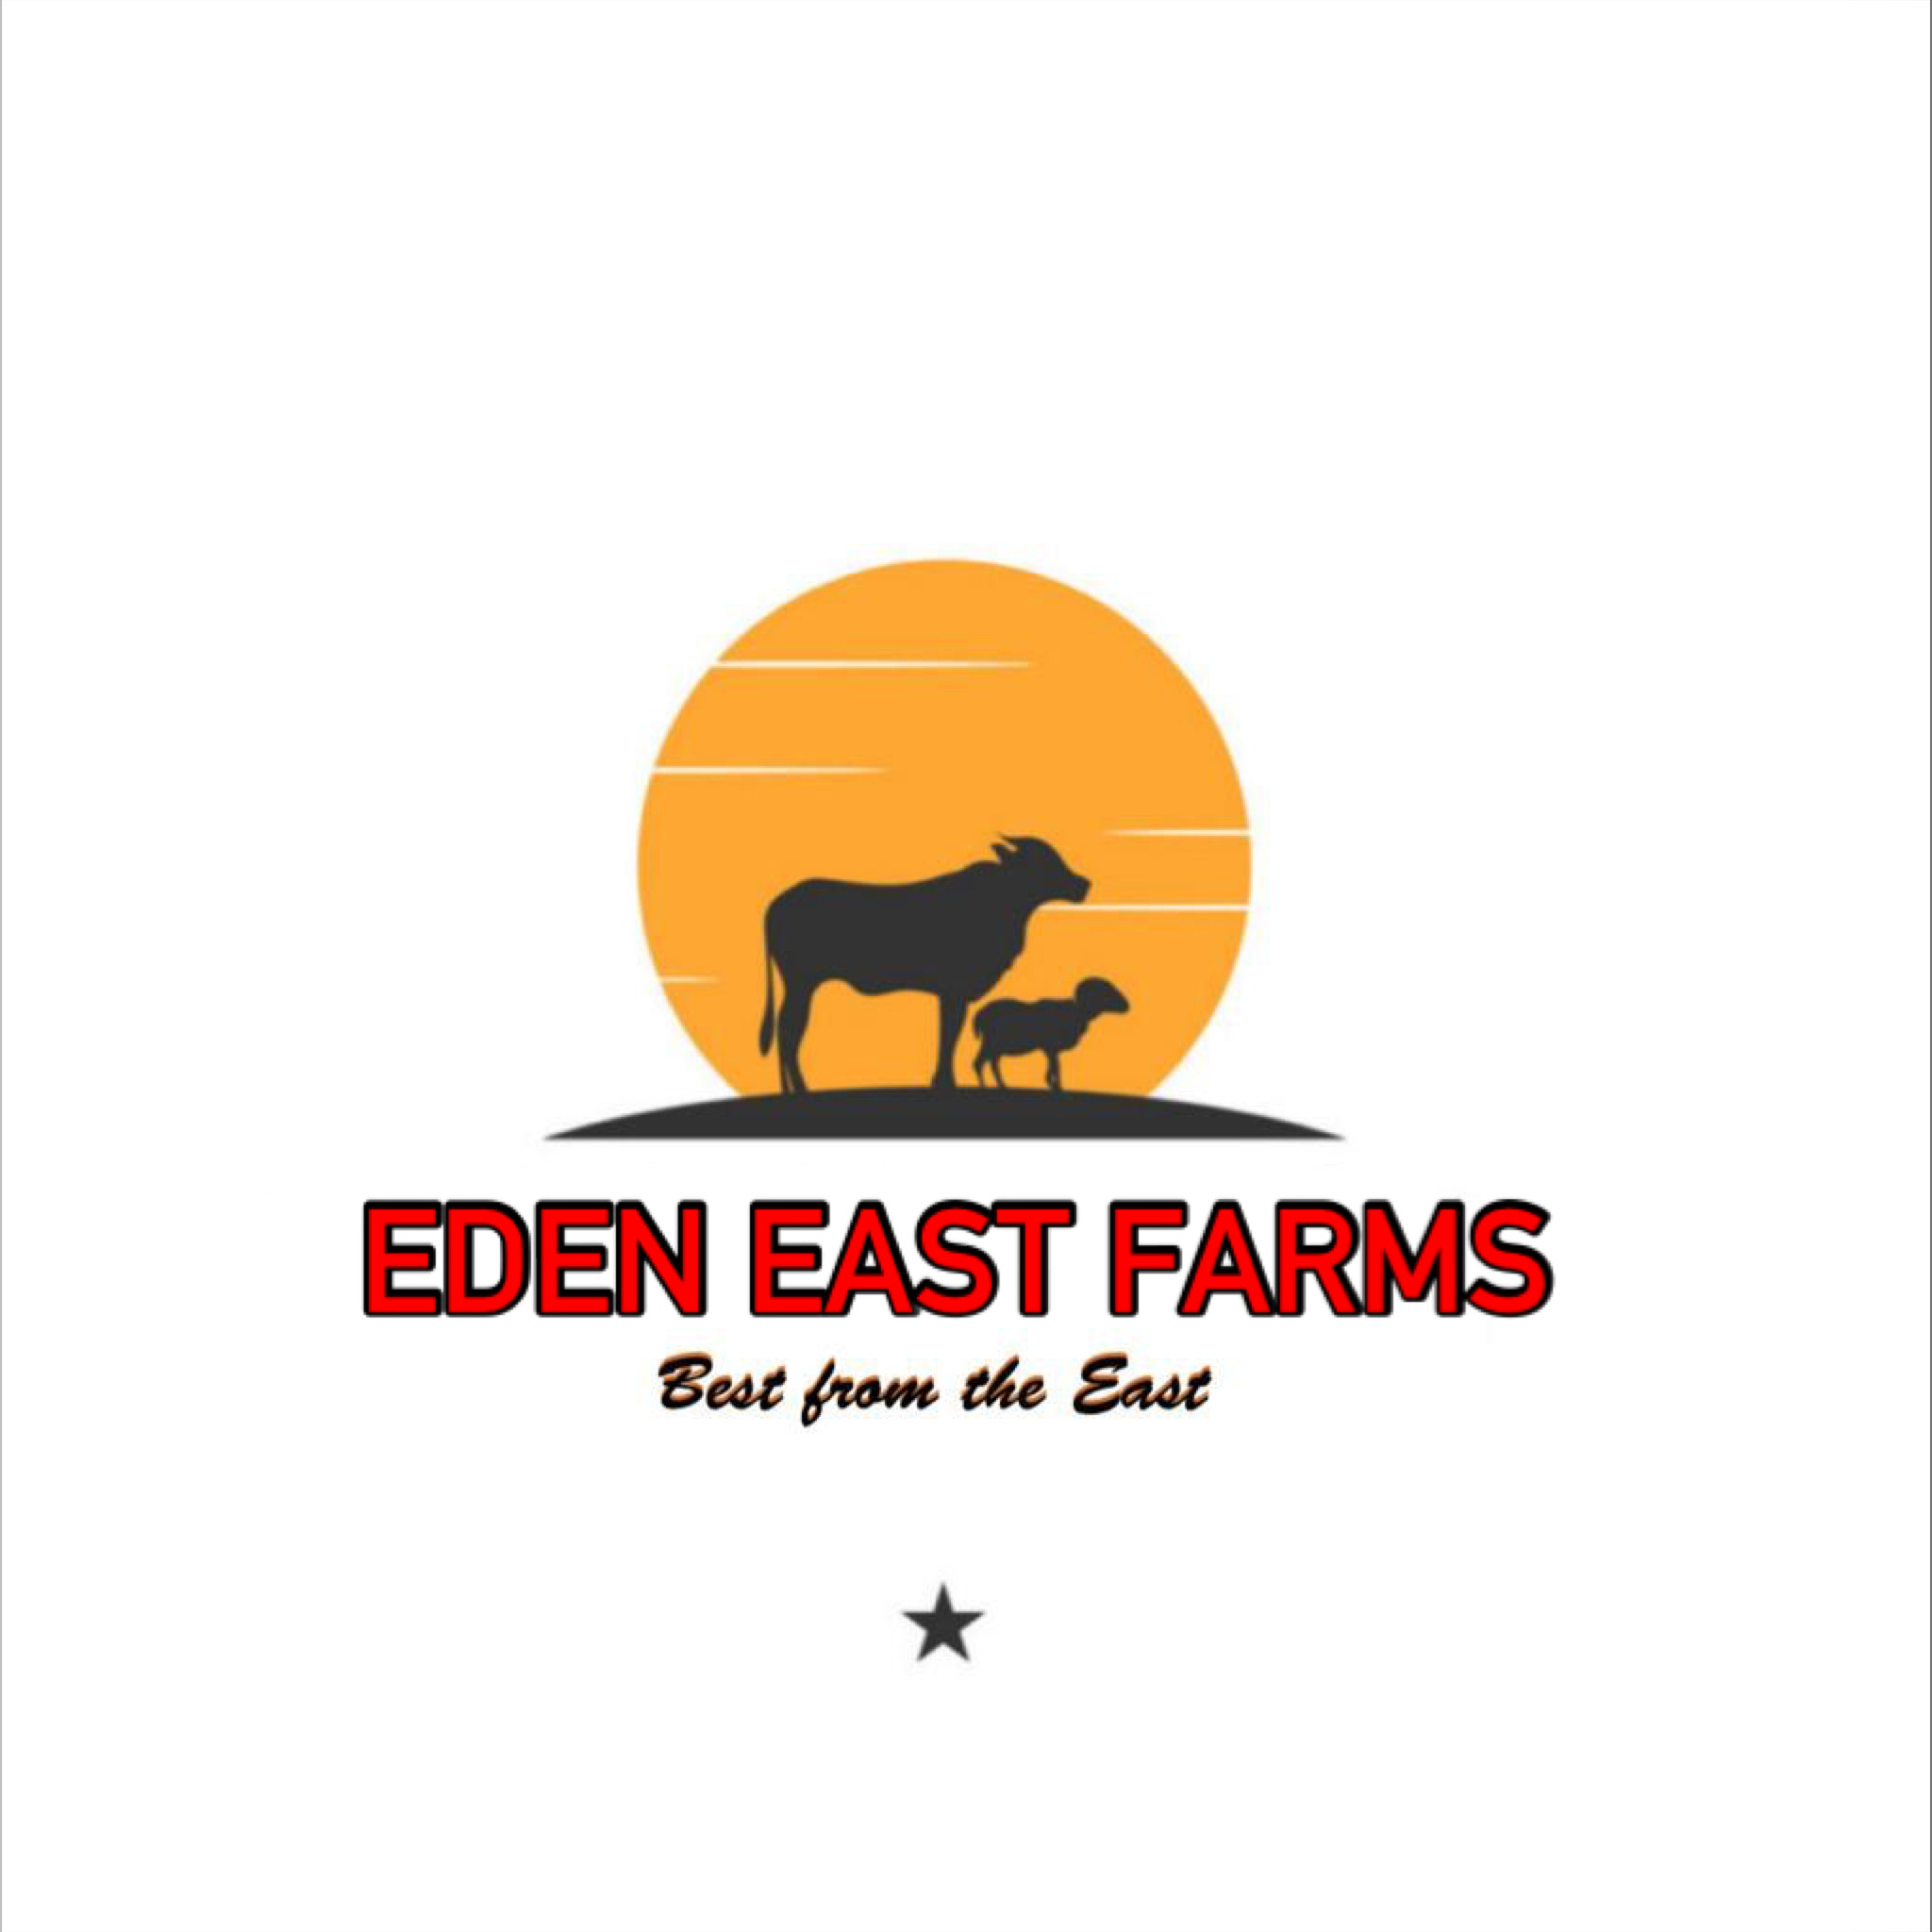 Eden east farms